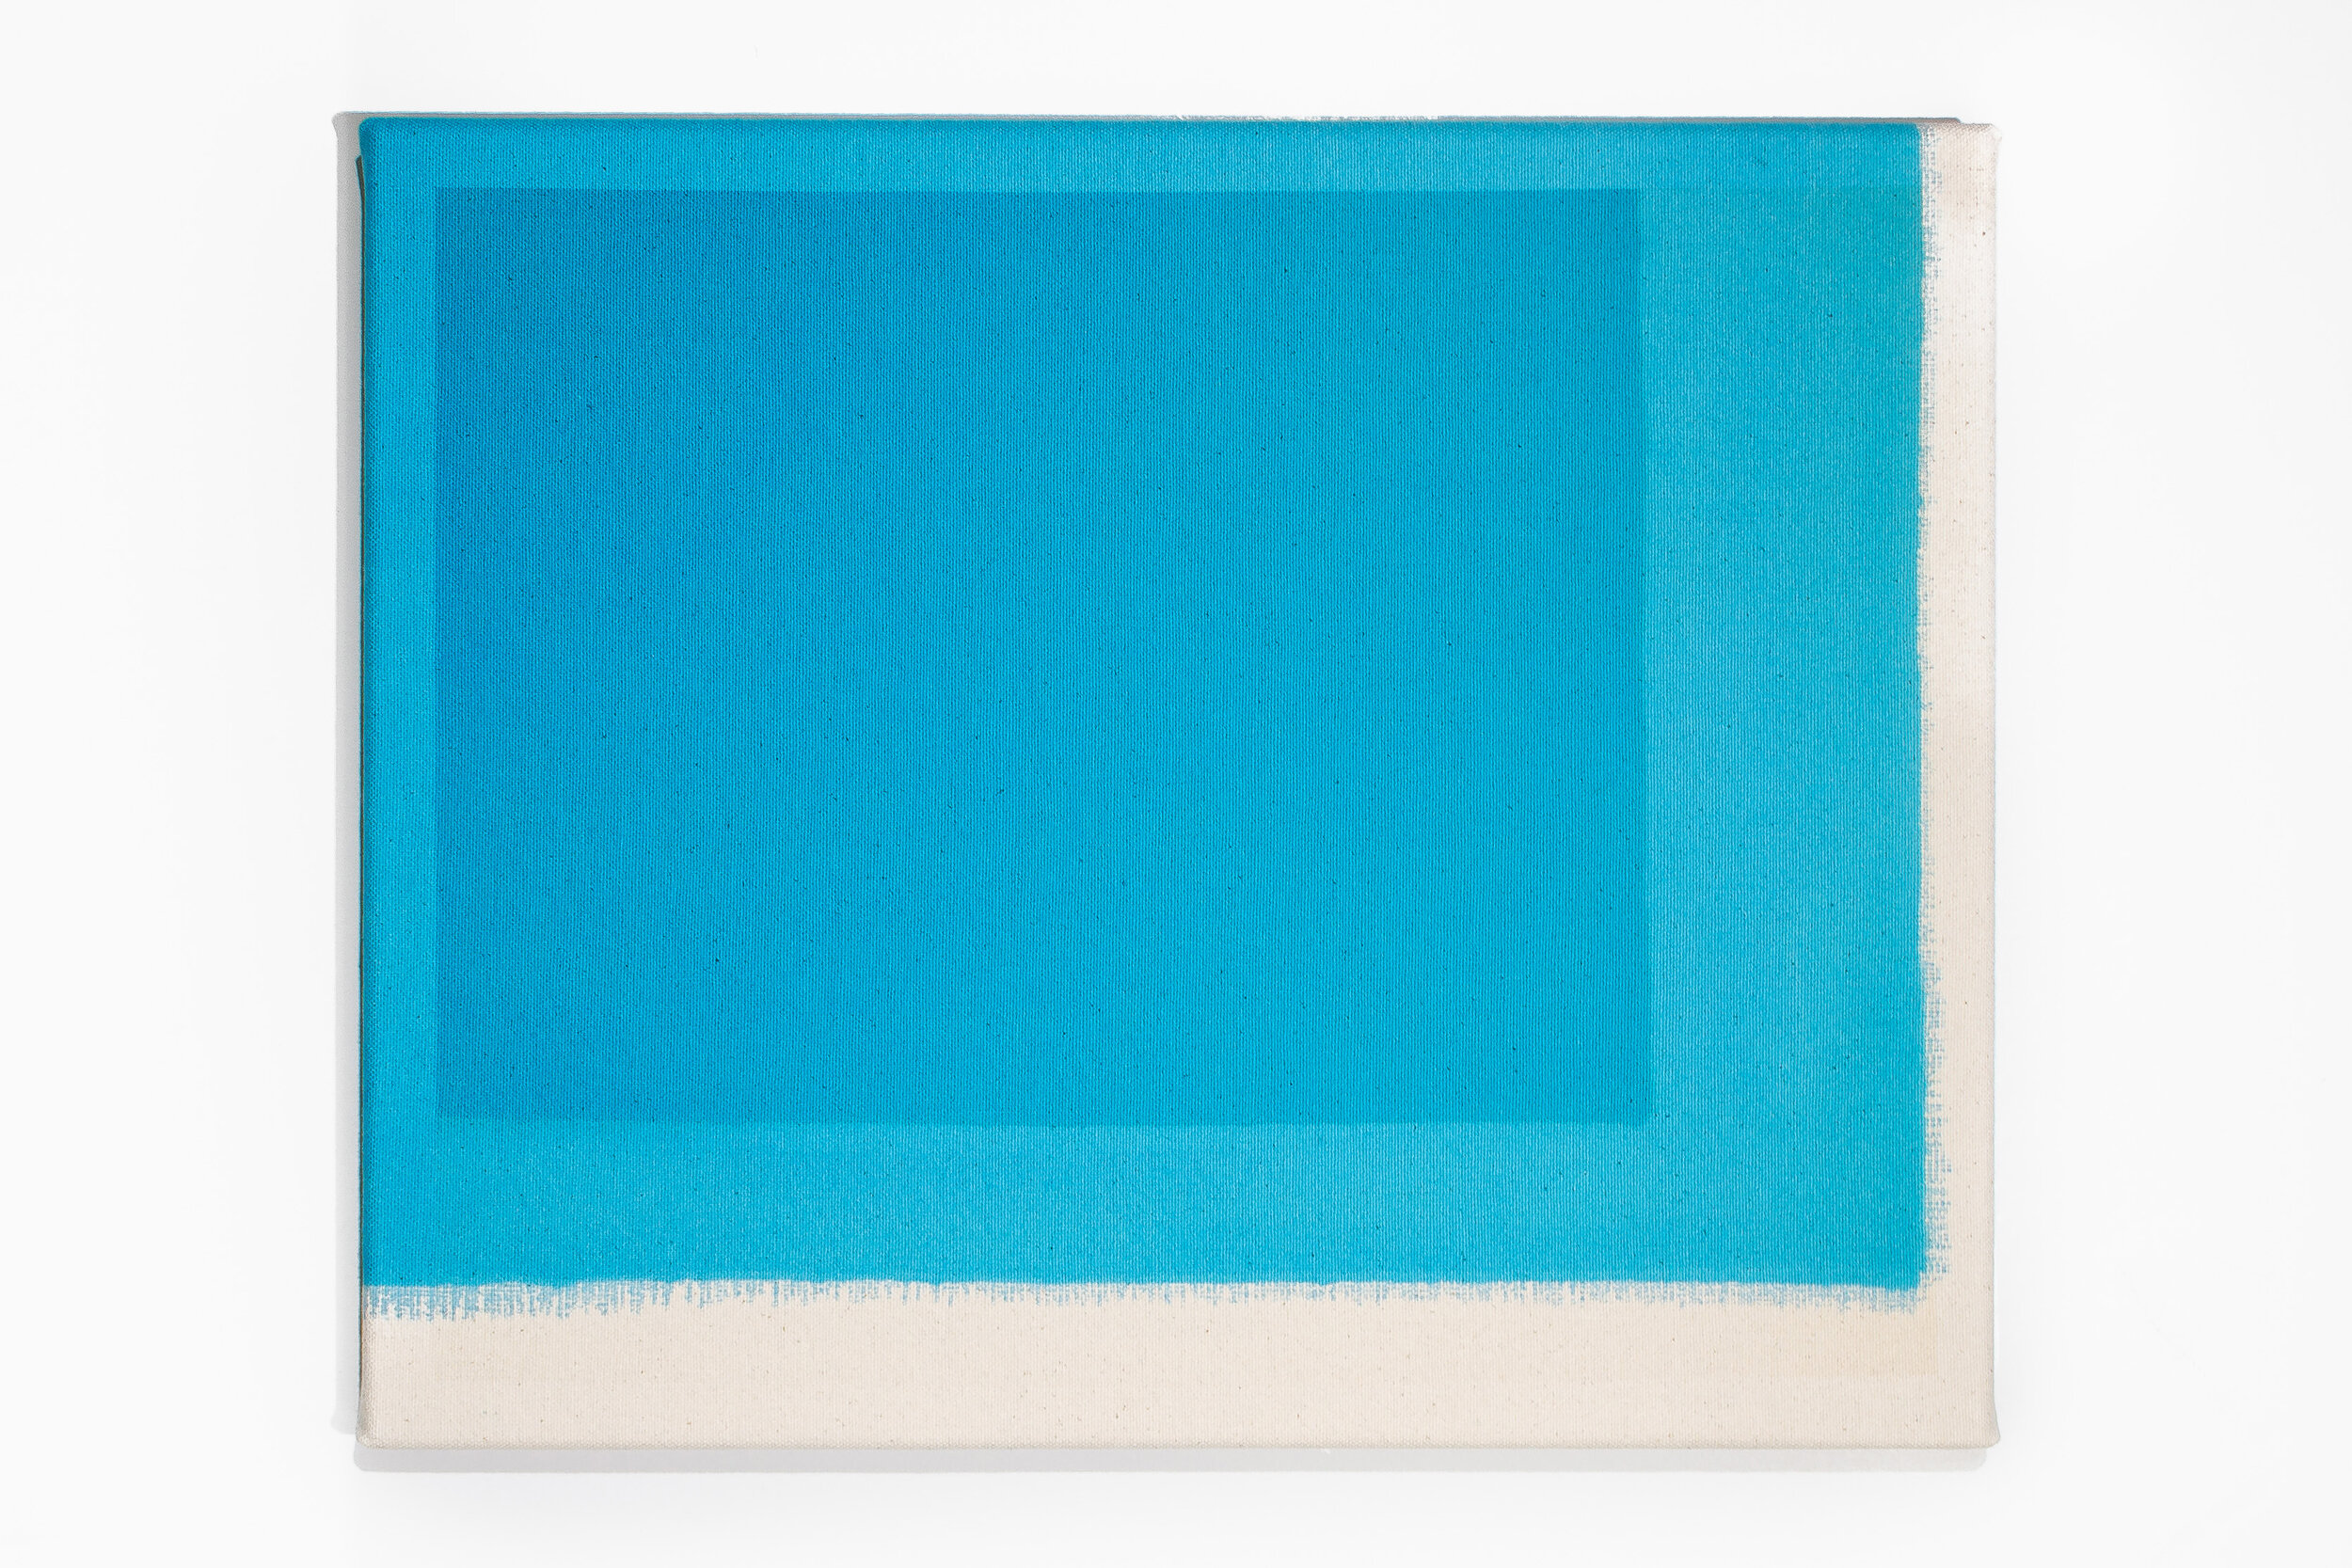   Underlay, light blue, 2019 Inkjet print and inkjet ink on canvas  38 x 31.5 cm 